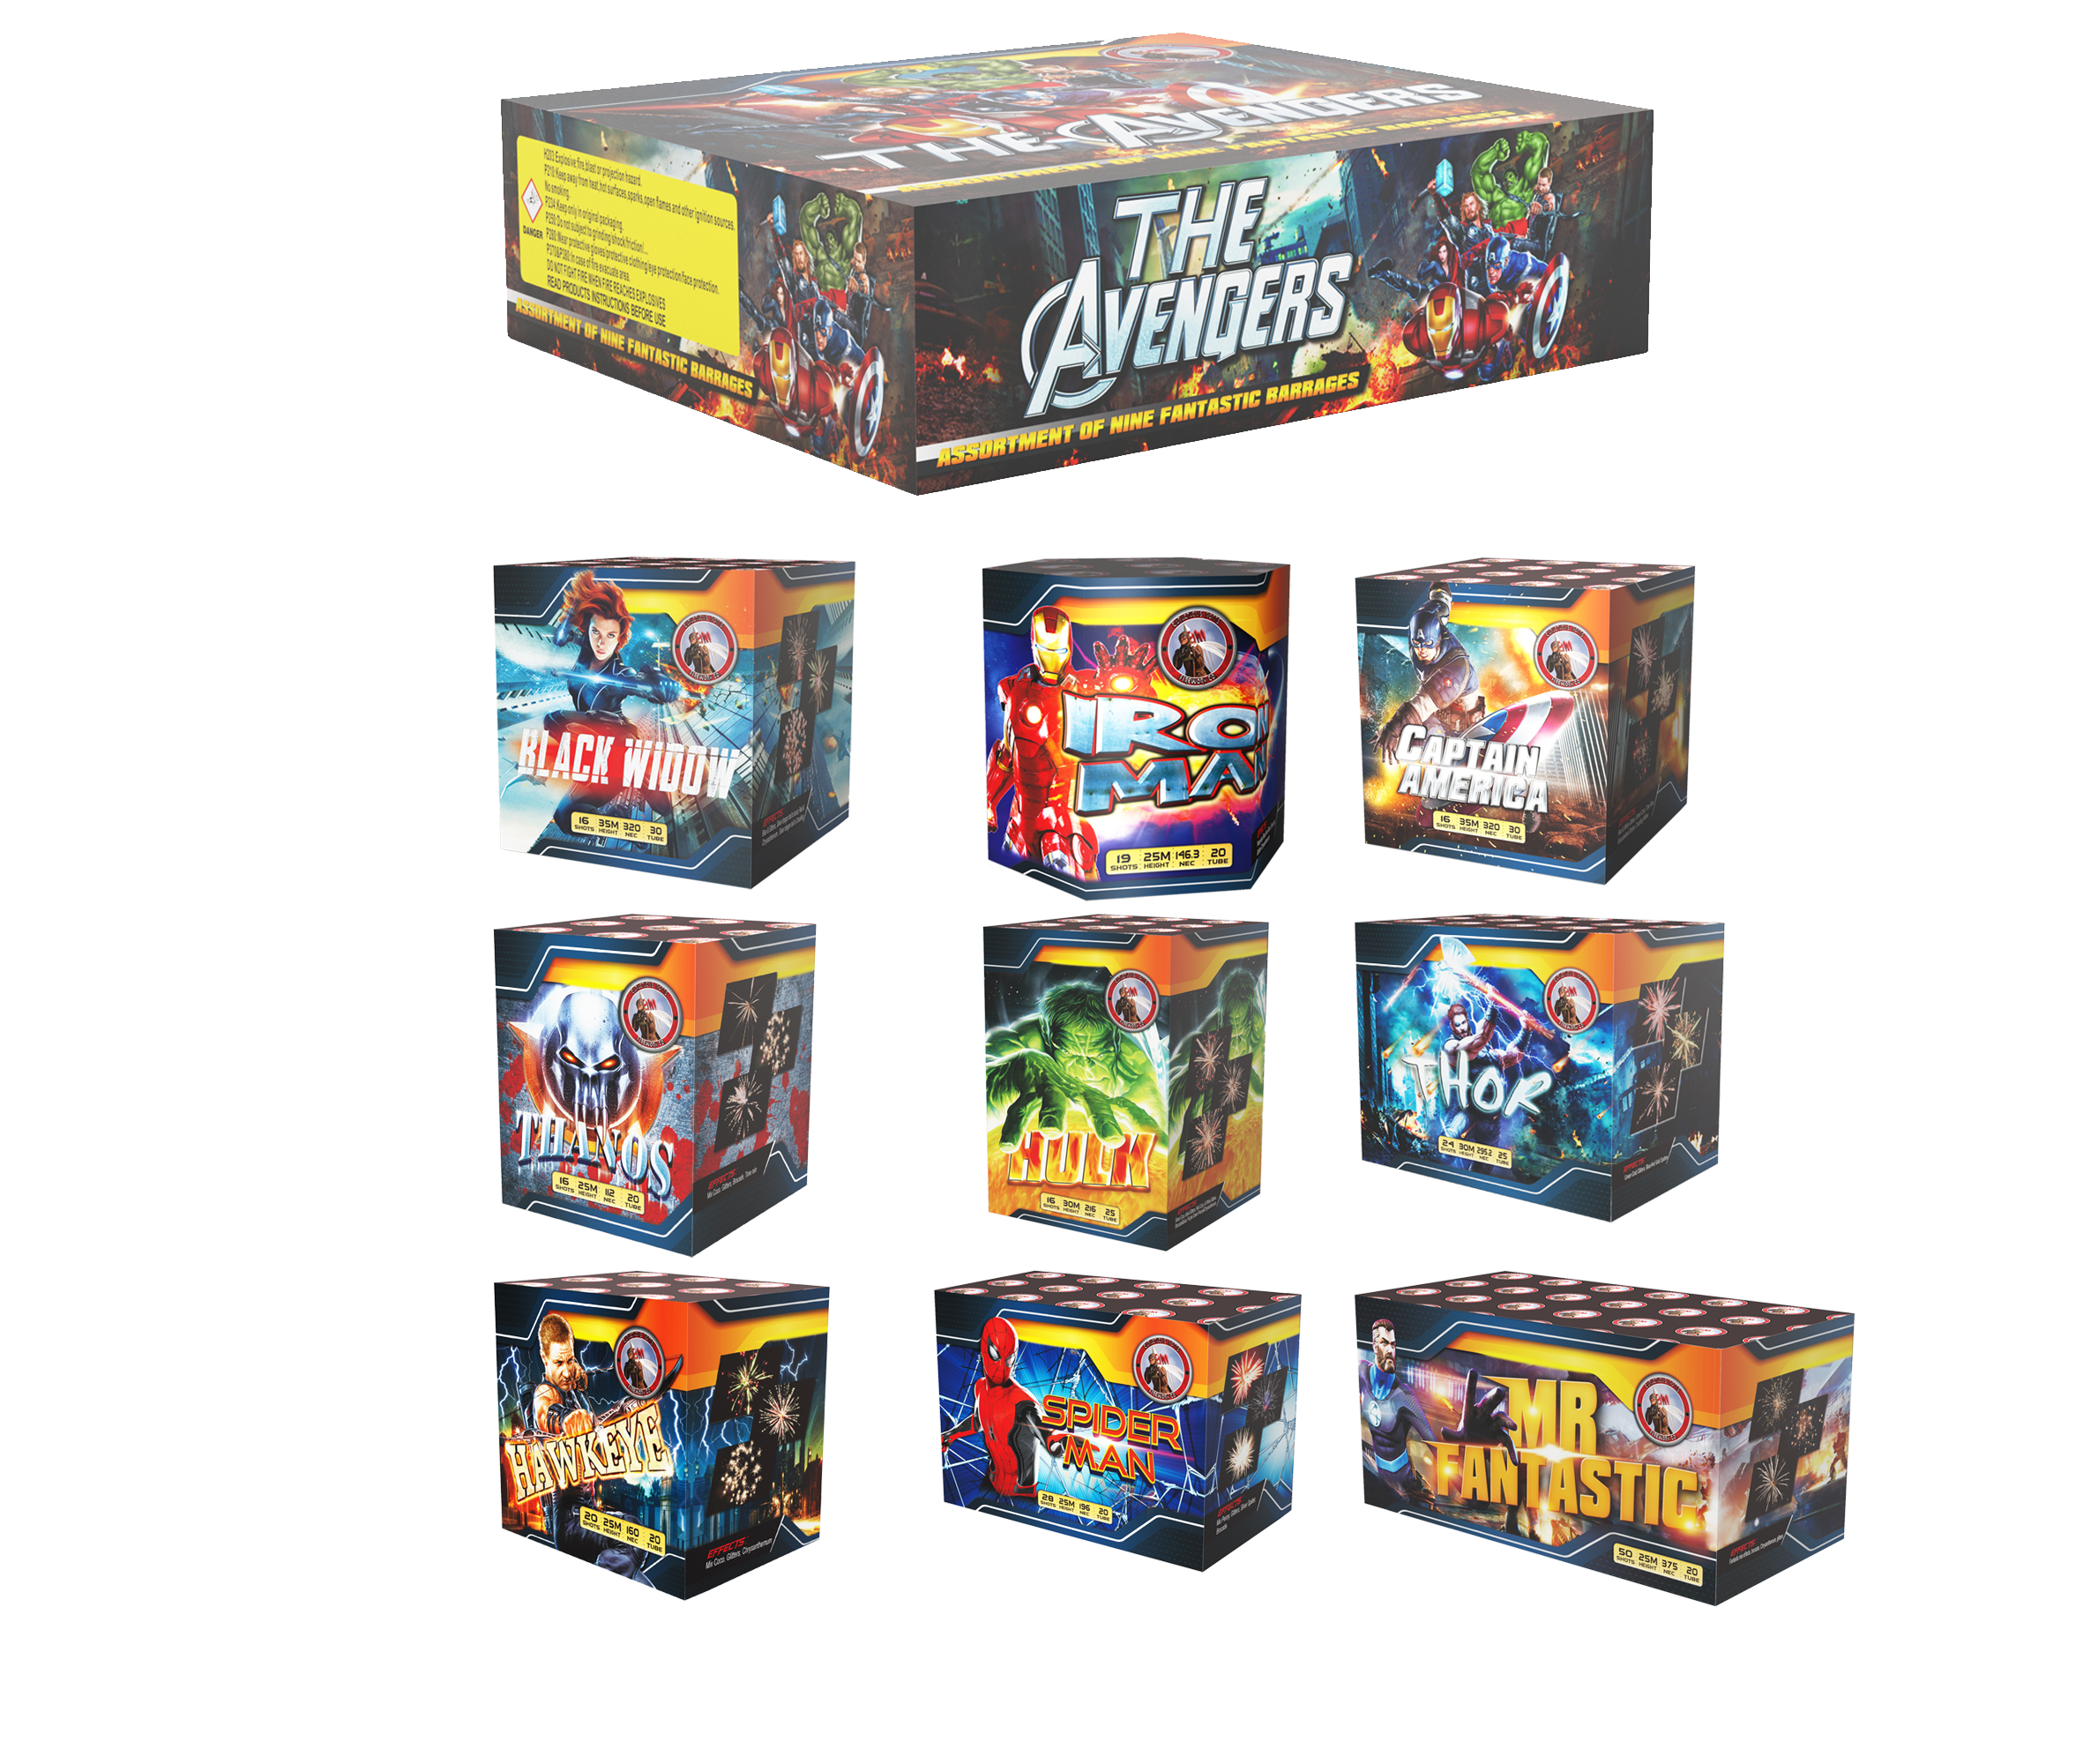 Barrage boxes/packs